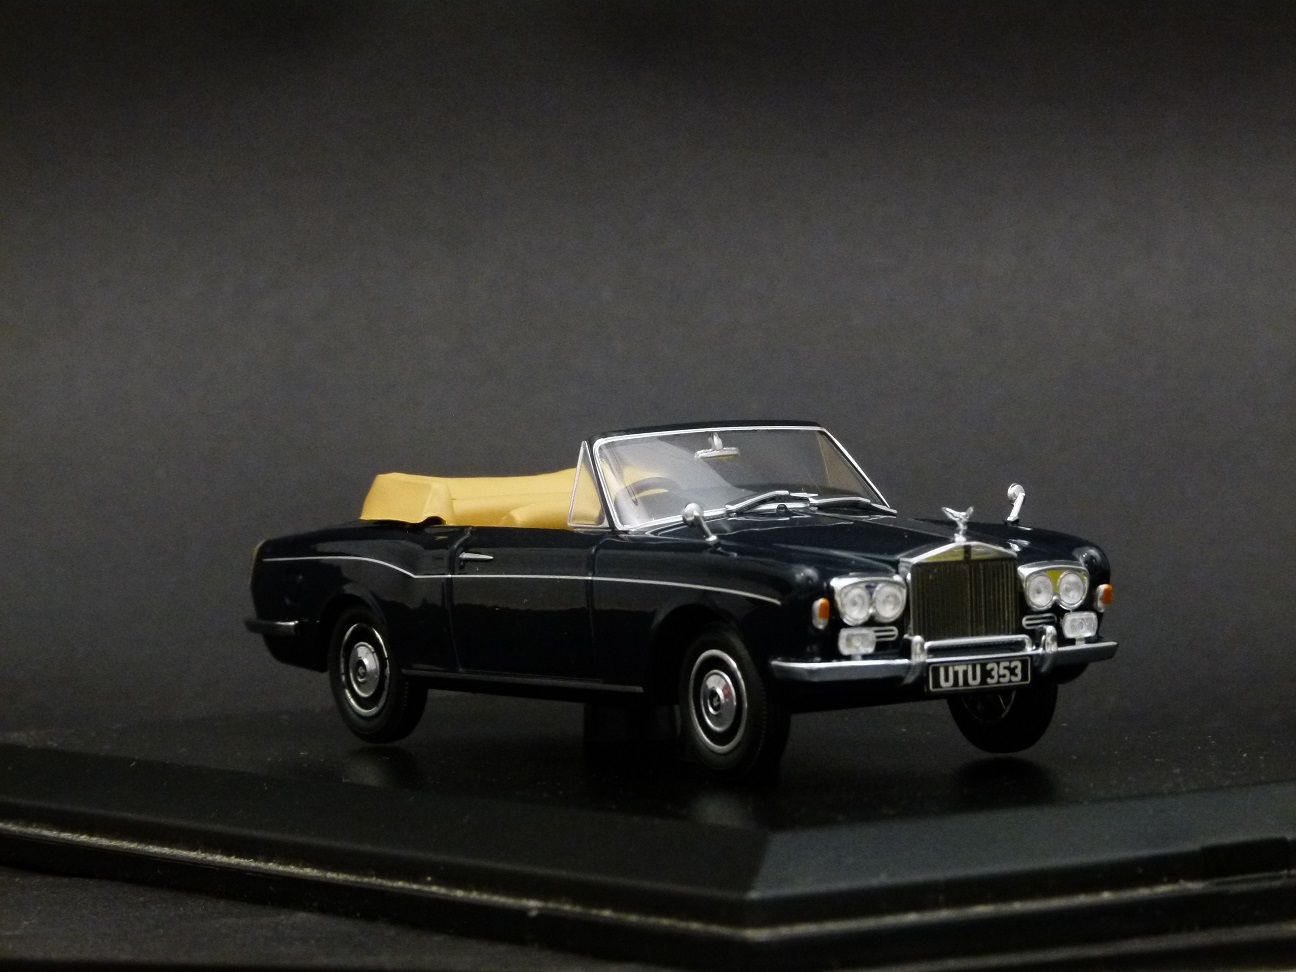 RR Corniche miniature diecast scale model cars